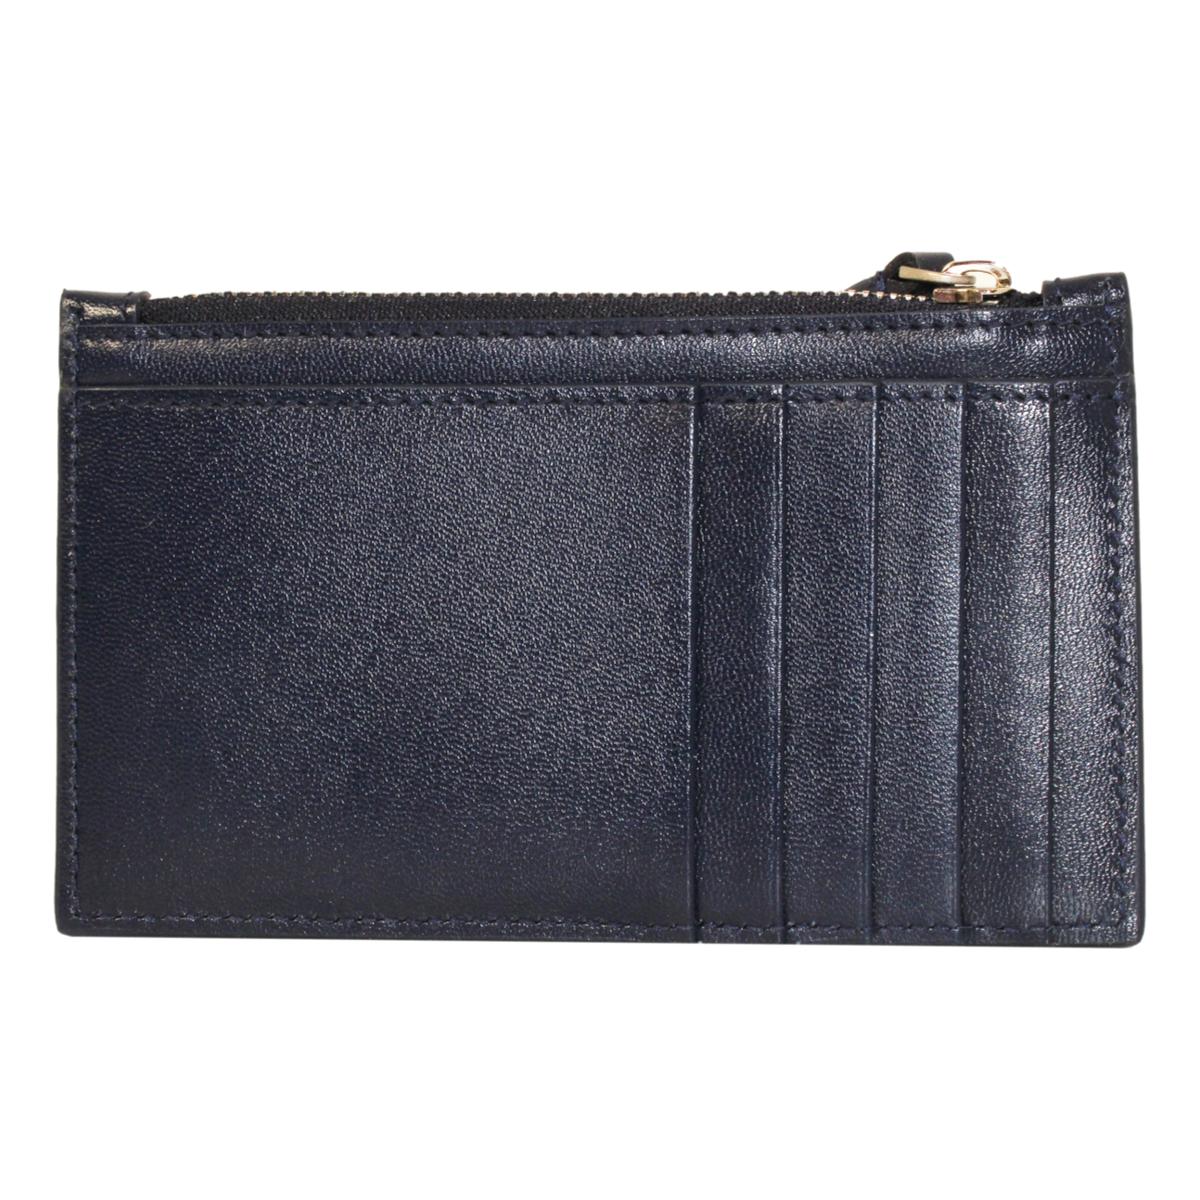 Balenciaga Cash Navy Leather Large Coin Card Holder Wallet 594311